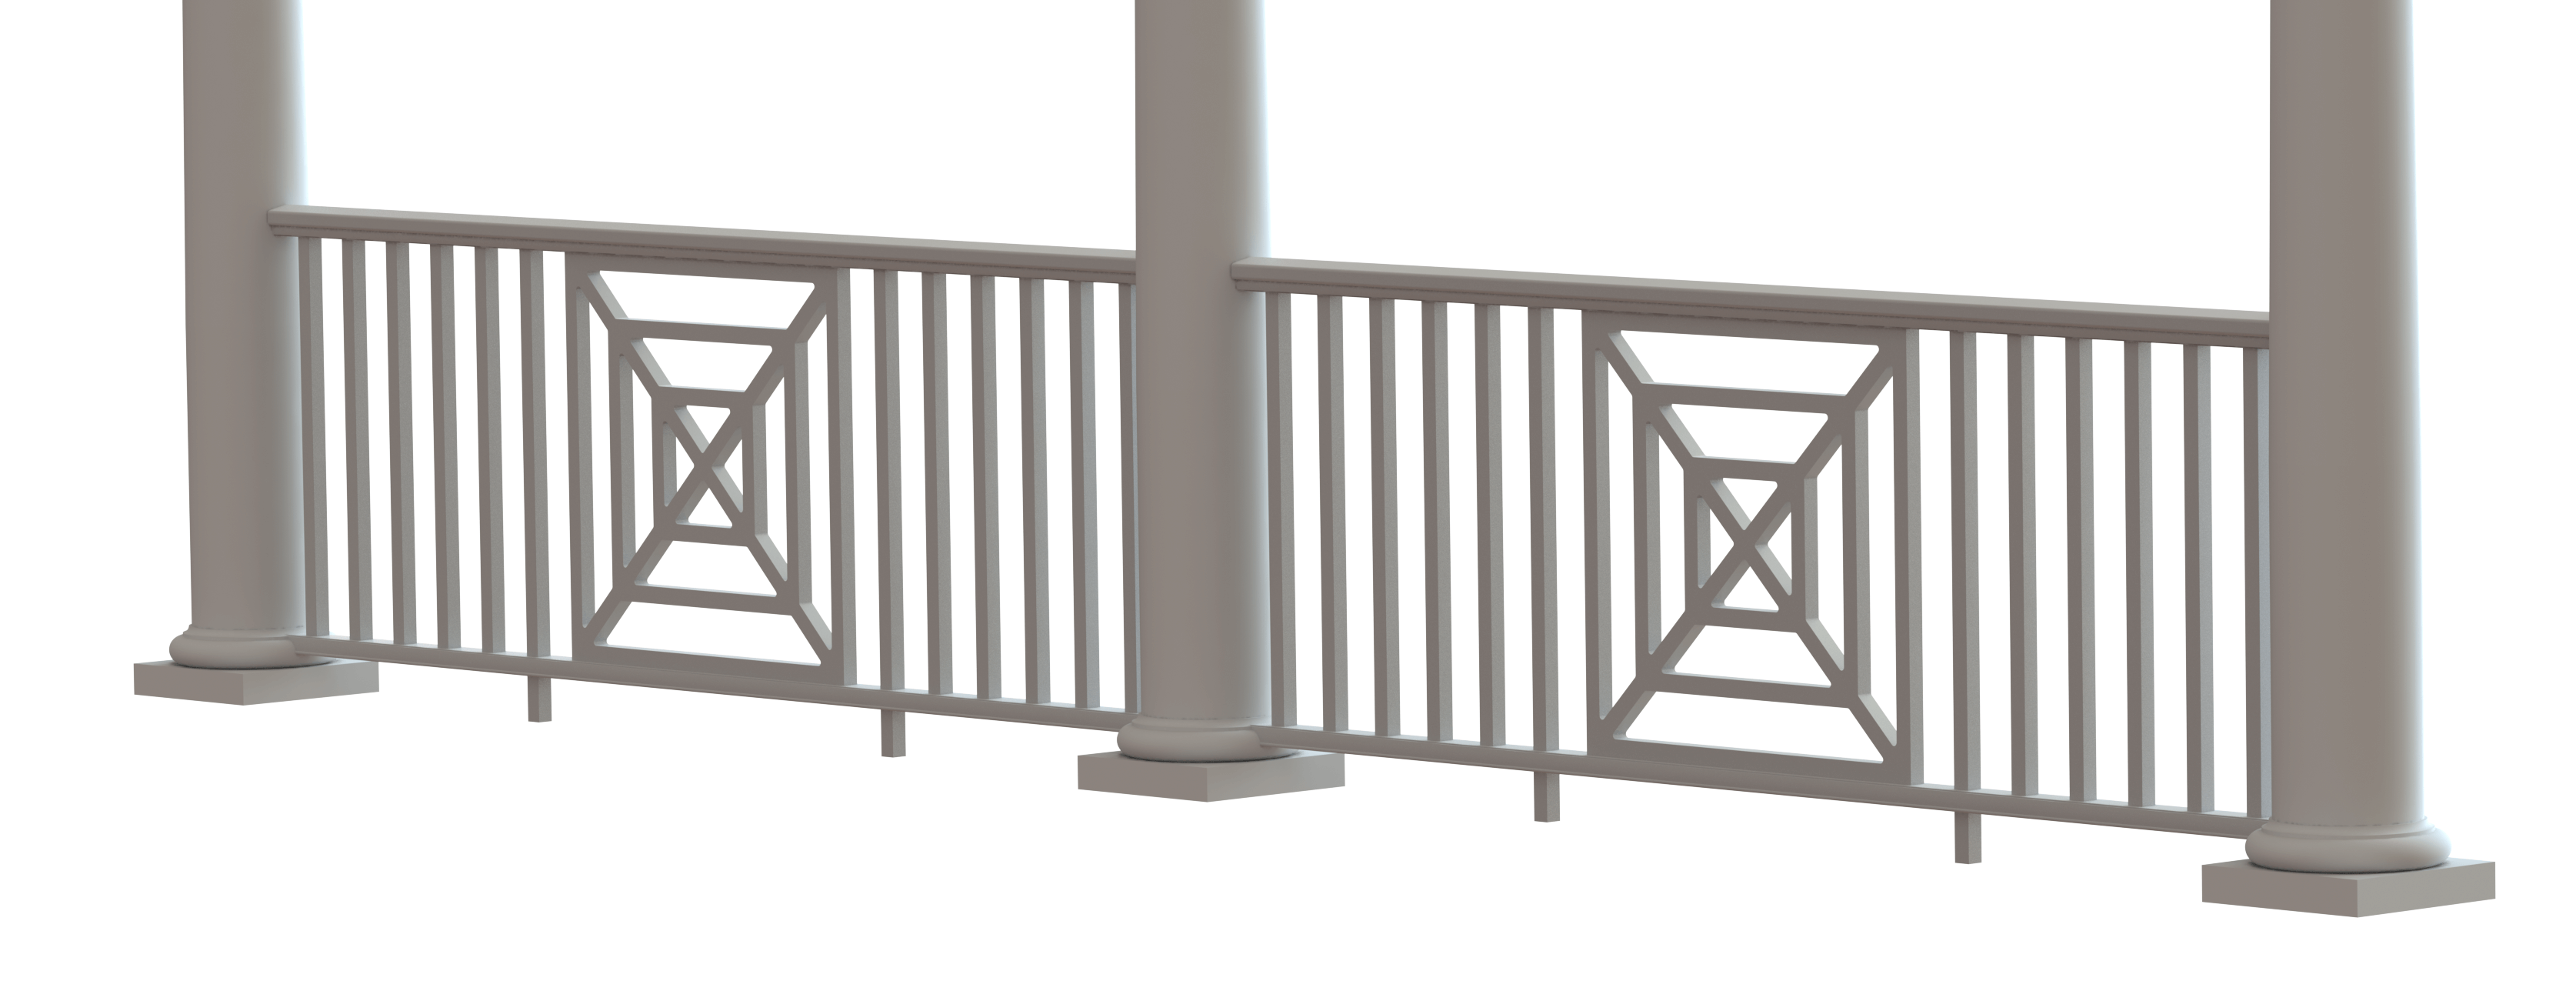 Porch Railings Shop For Permarail Plus Cpvc Railing System For Porches At Hb G Columns